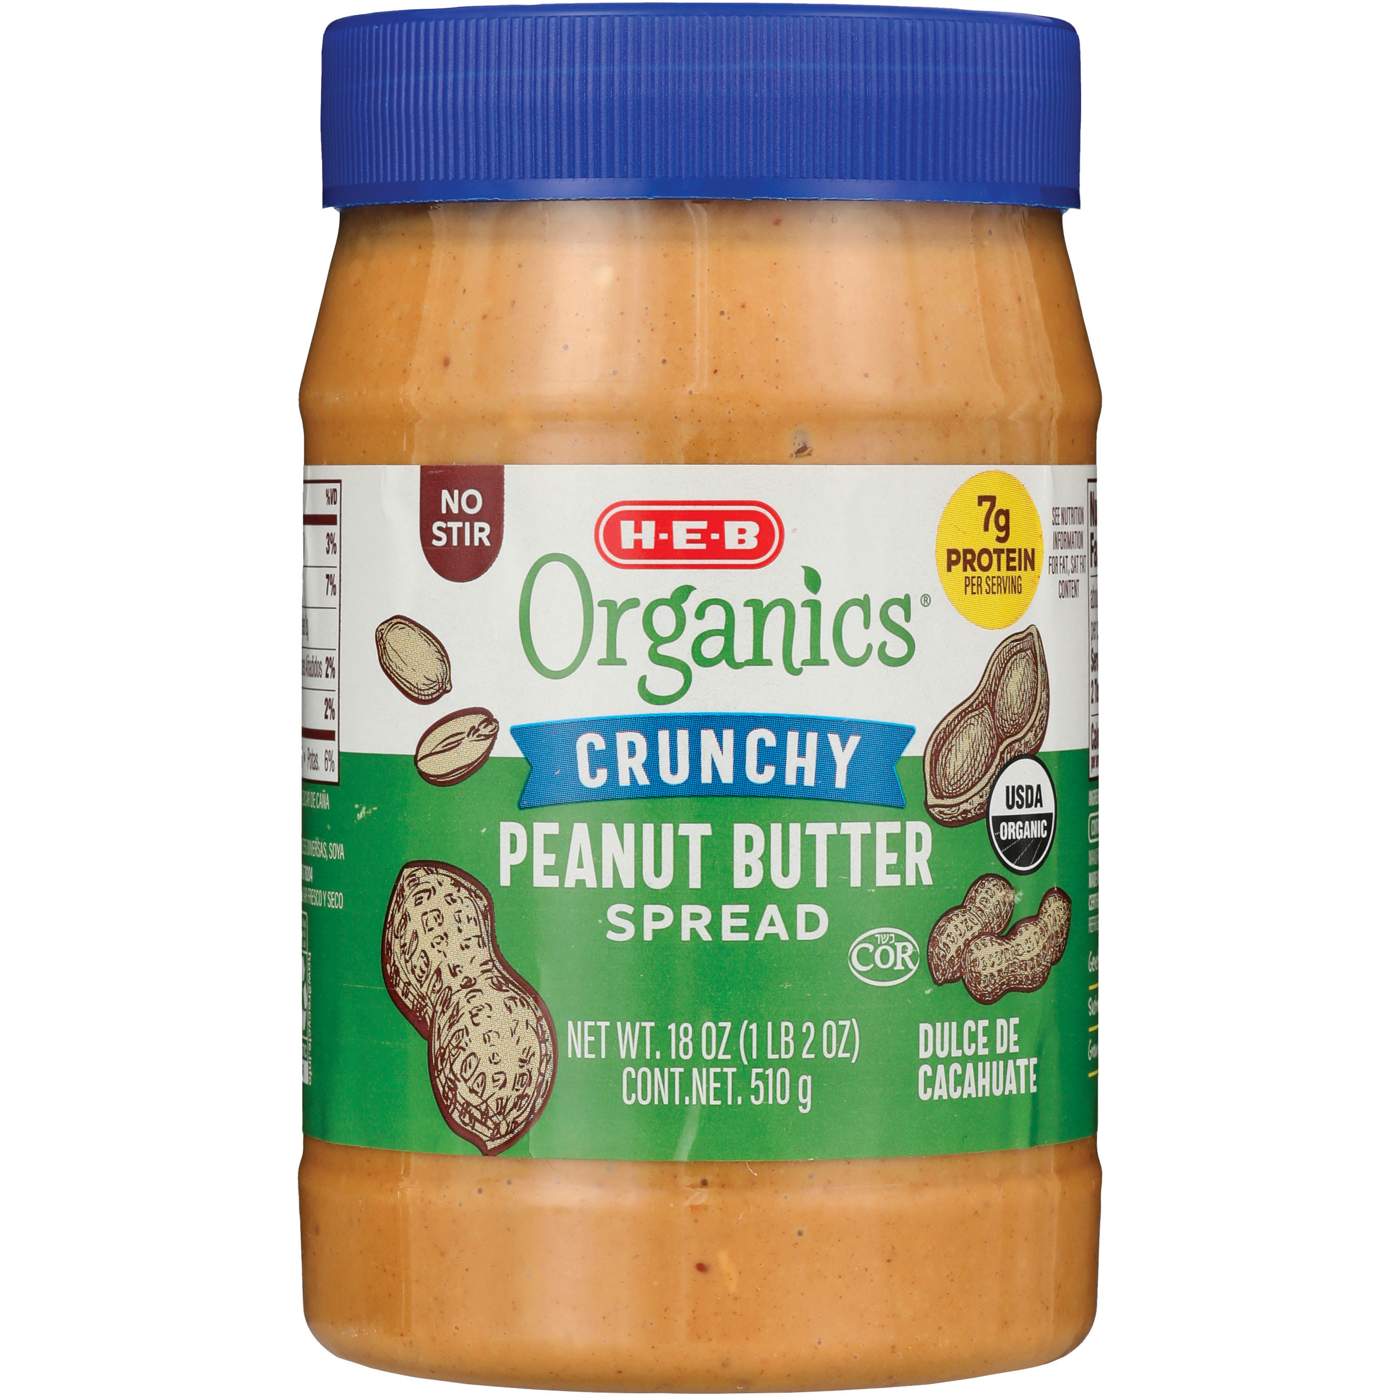 H-E-B Organics 7g Protein Crunchy Peanut Butter; image 1 of 2